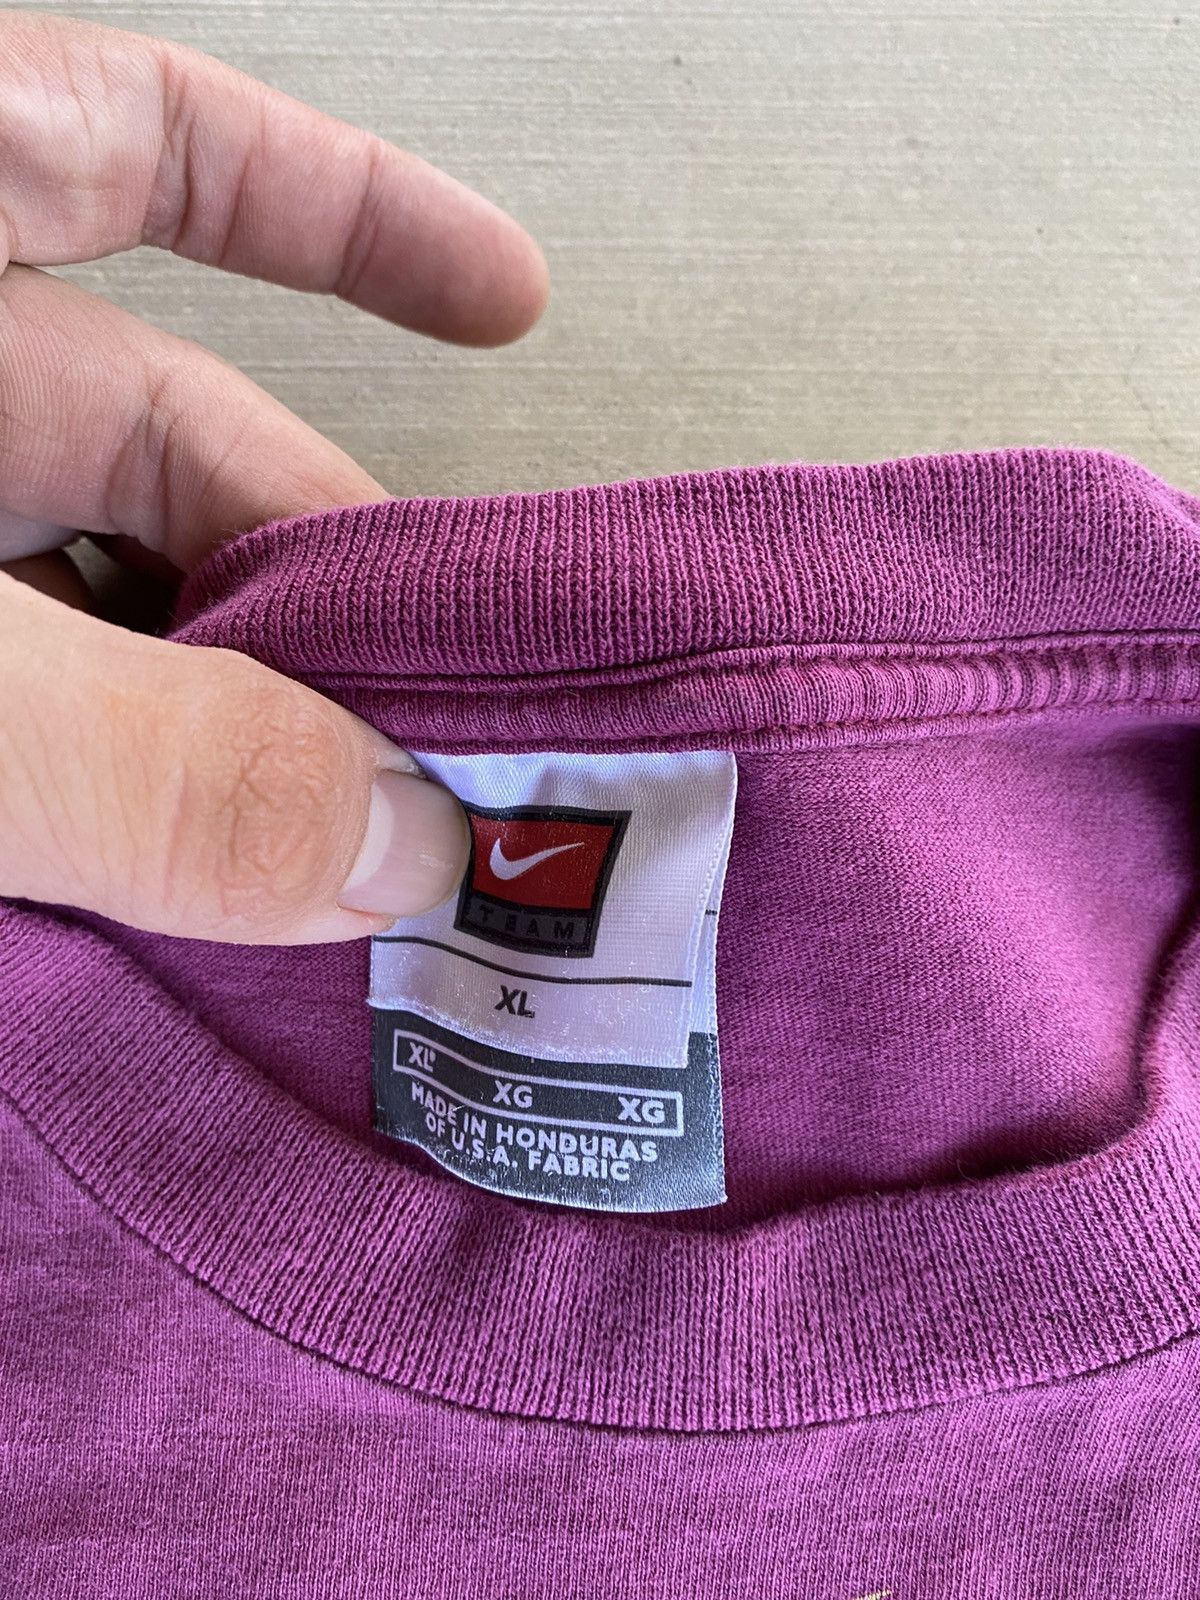 Nike Vintage Center Check ASU Shirt Size US XL / EU 56 / 4 - 3 Thumbnail